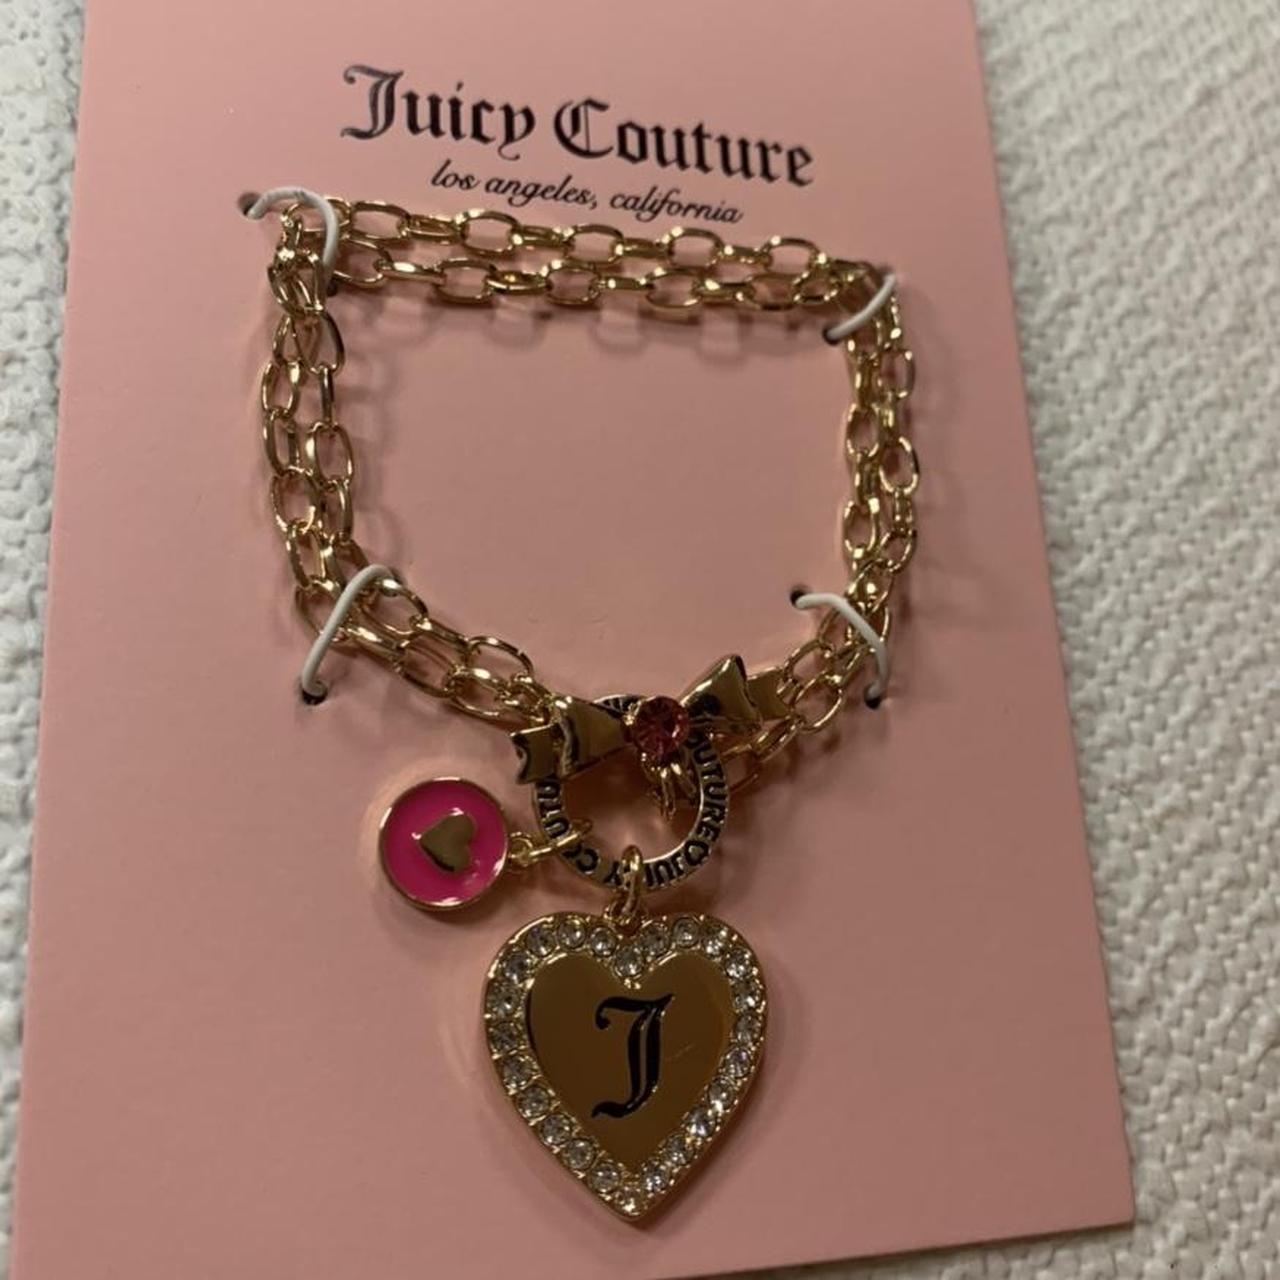 Juicy Couture Black Label Juicy Couture Starter Charm Bracelet